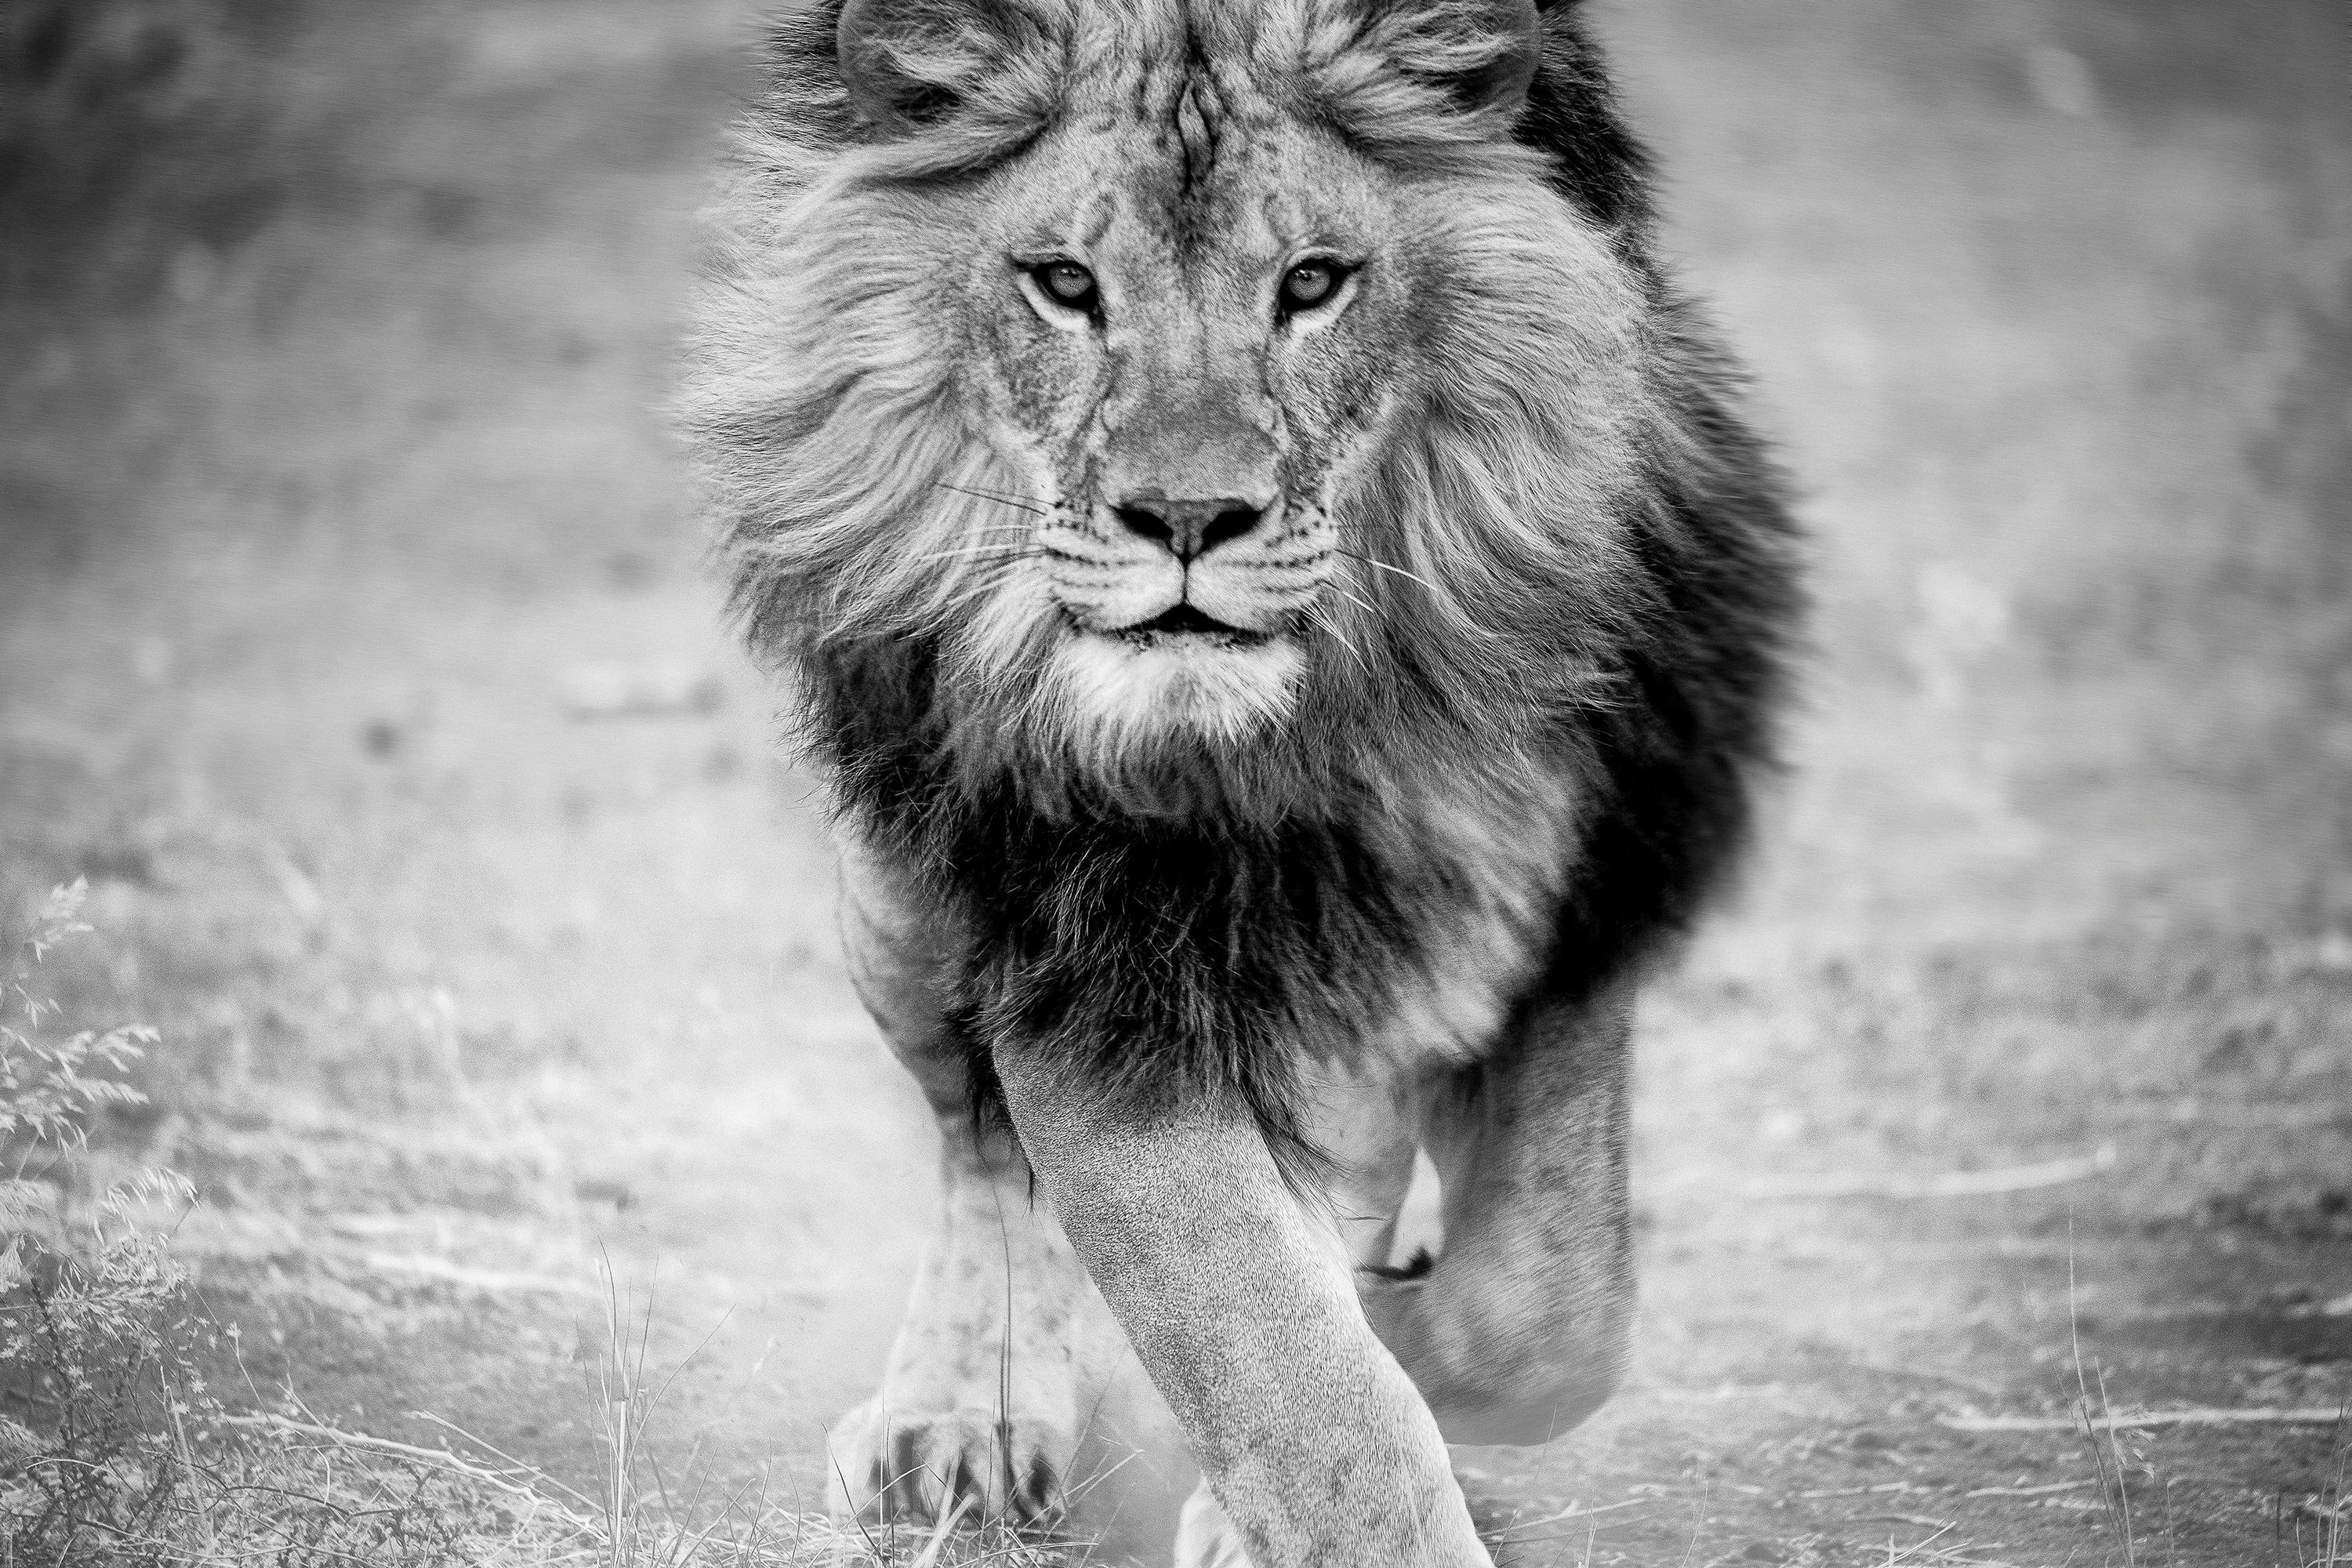 Shane Russeck Animal Print - "Panthera Leo" 20x30 - Black & White Photography, Lion Photograph Unsigned Print